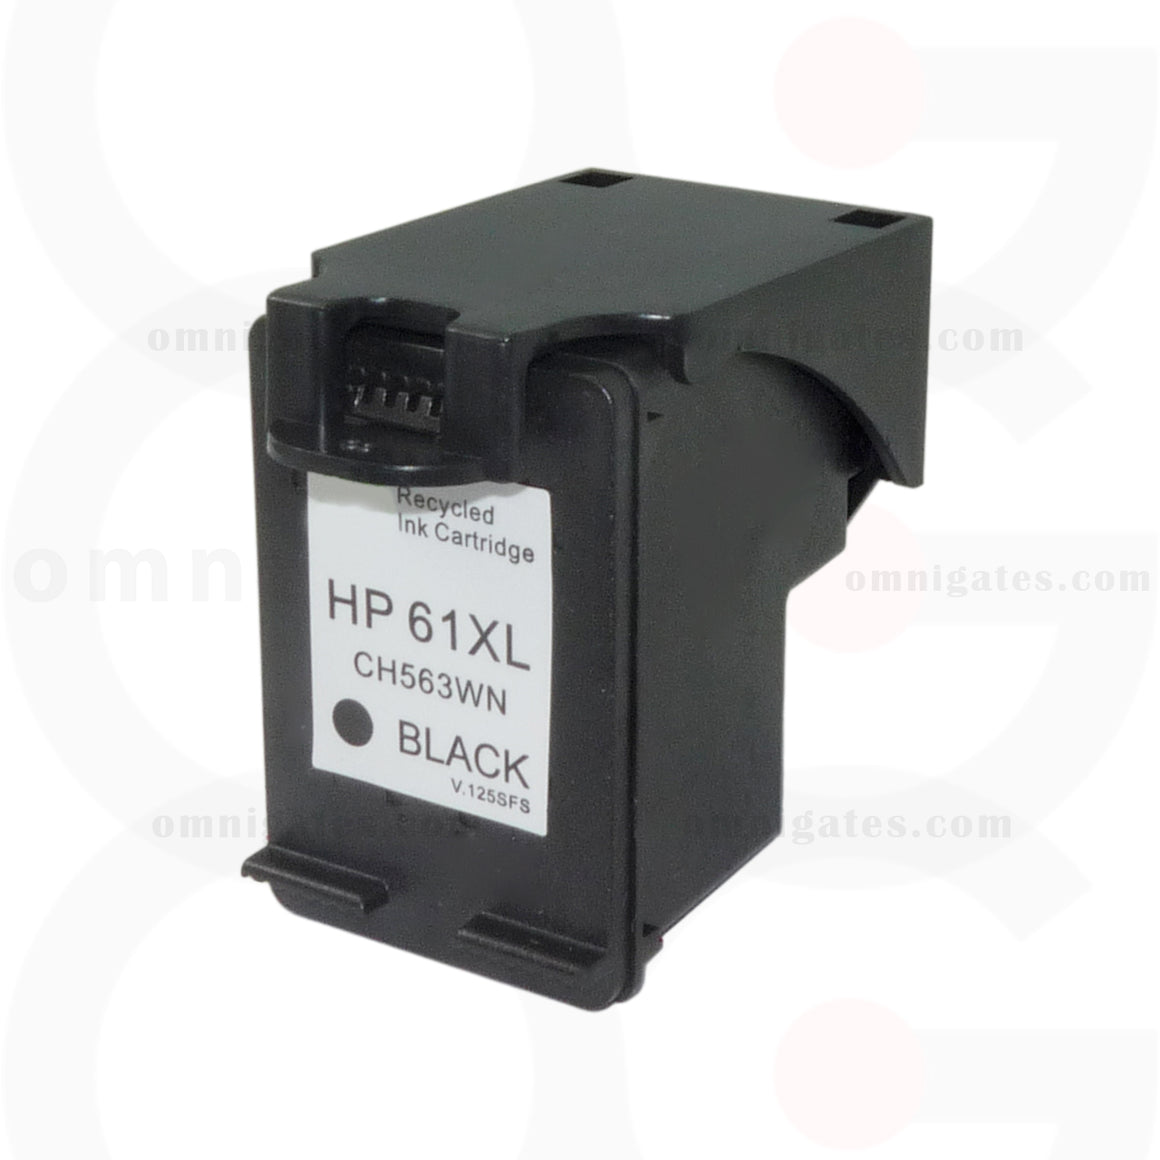 Black OGP Remanufactured HP CH563WN Inkjet Cartridge